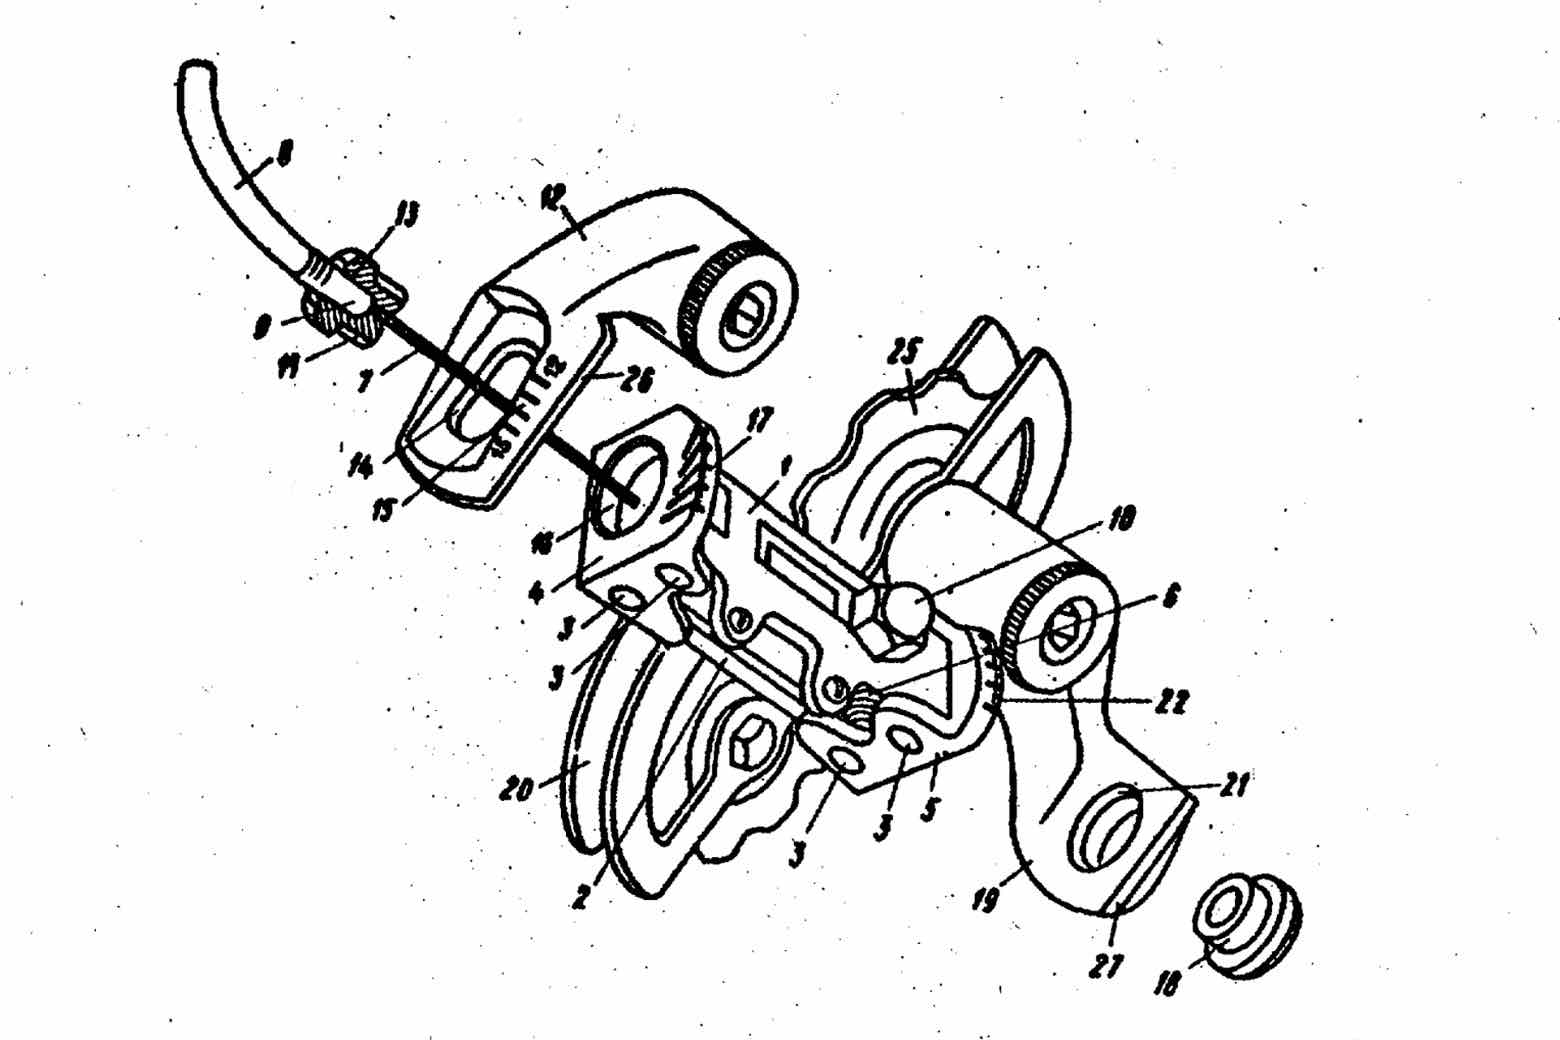 USSR Patent 921,939 - unknown derailleur main image